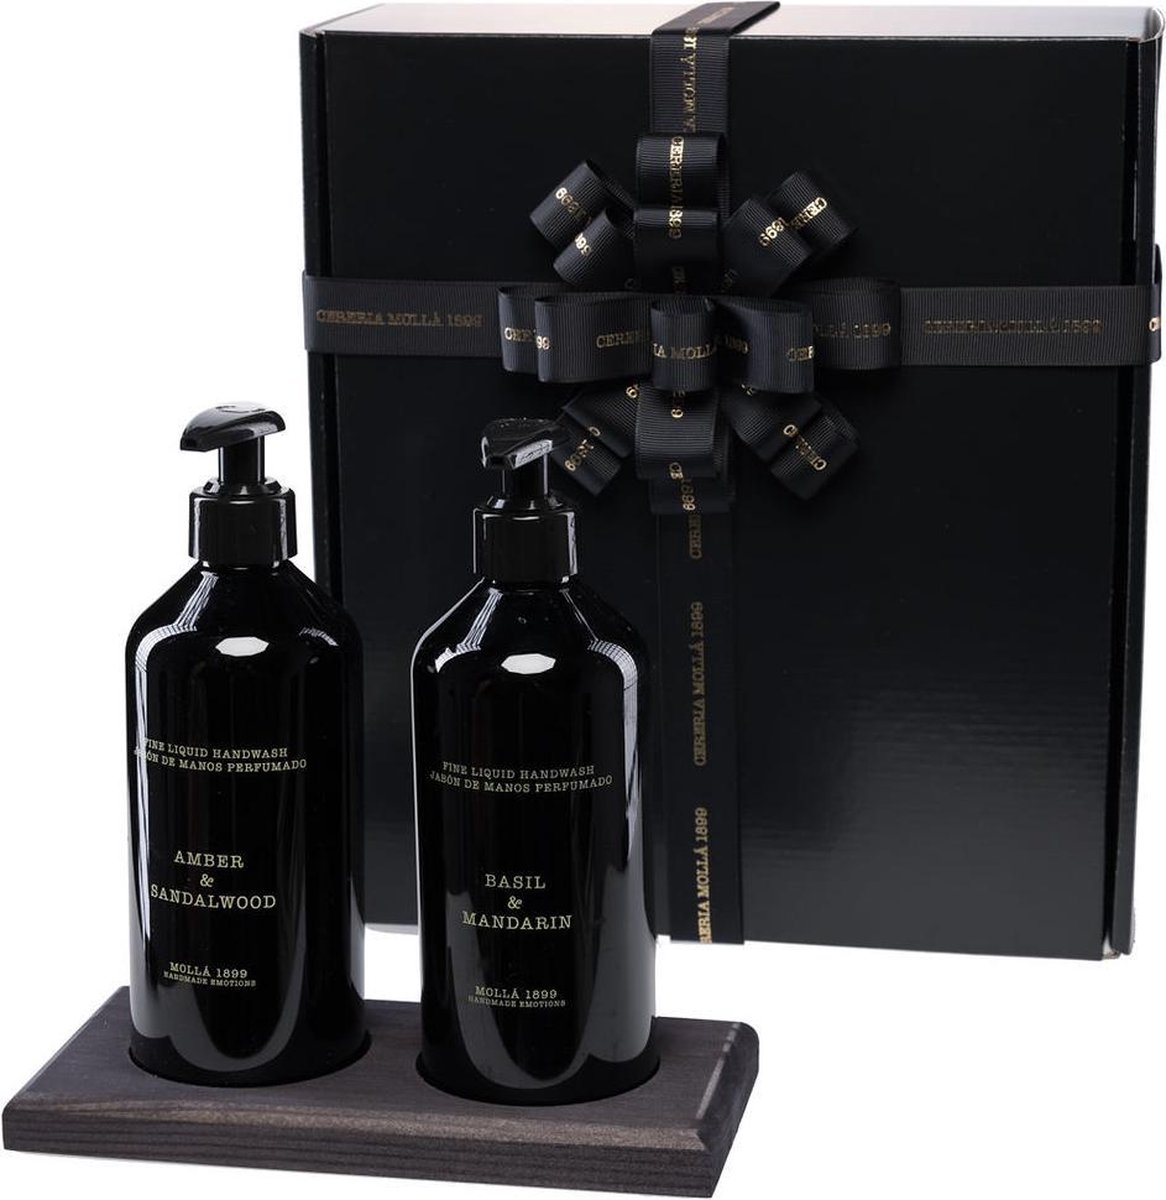 Cereria Molla 1899 - Giftset Cadeau Box doos geschenken set Fine Liquid Handwash Bodywash Zachte zeep 500ml Basil & Mandarin - Amber & Sandelwood Ideaal cadeau valentijn